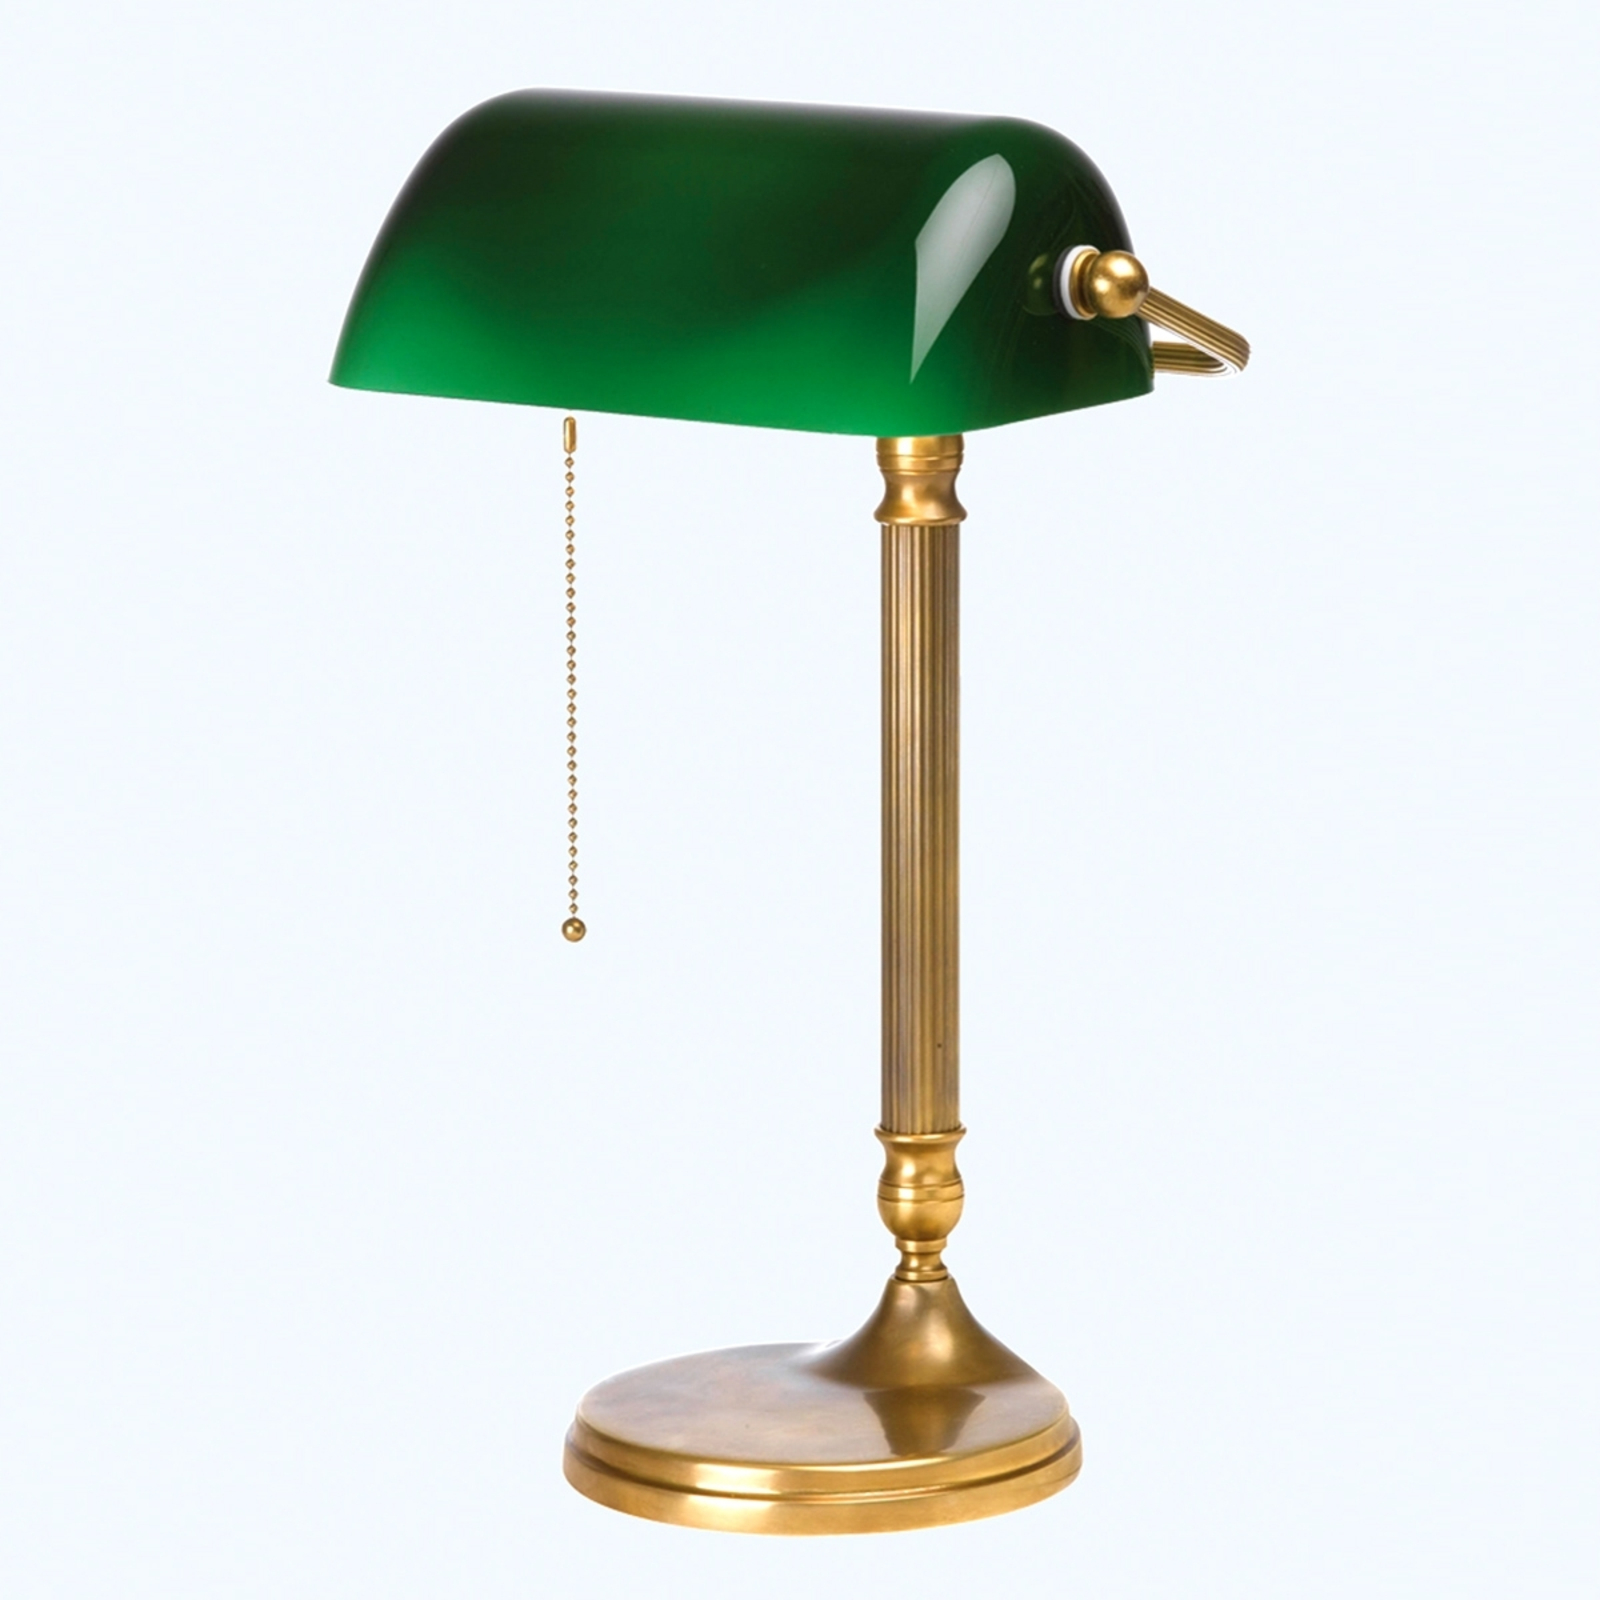 JIVAN handmade banker's lamp